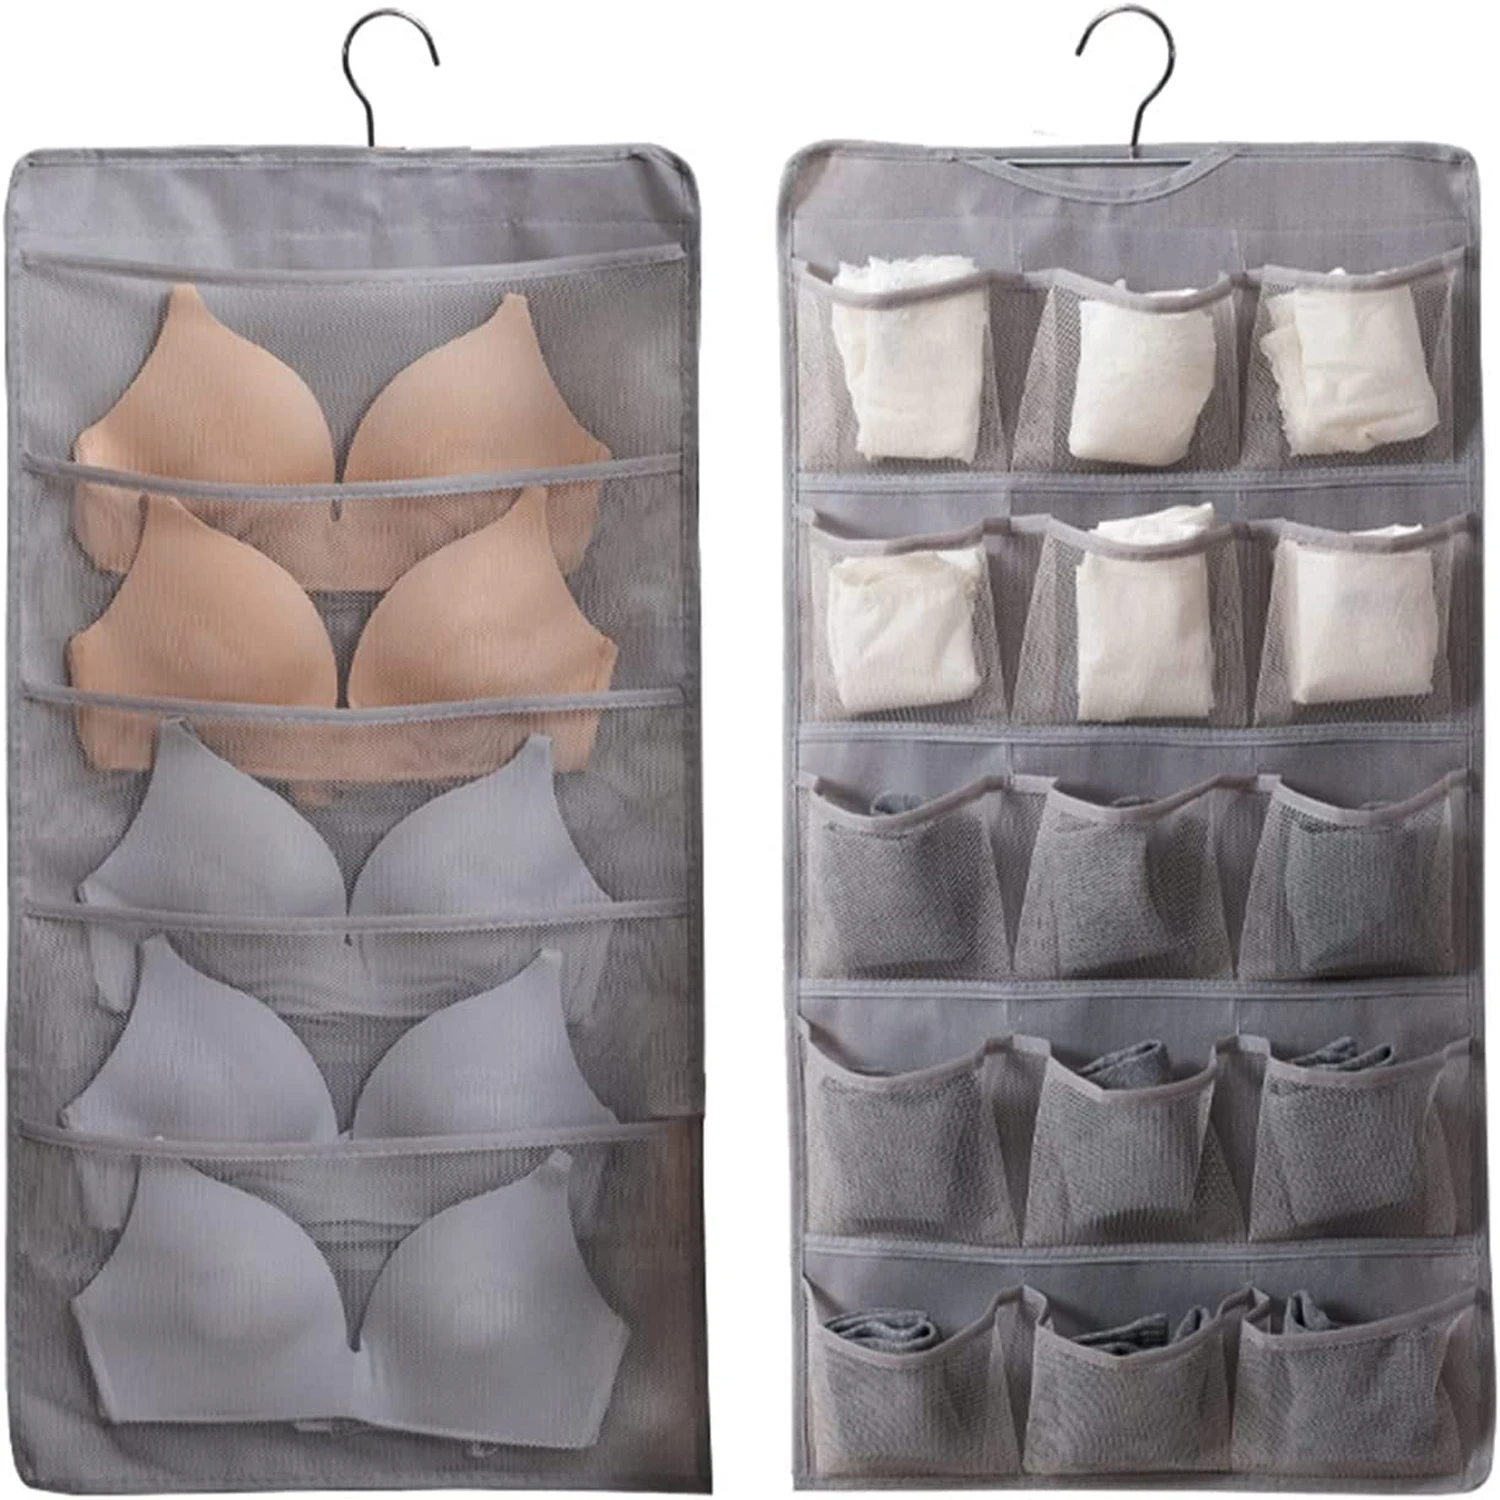 Underwear Bra Storage Bag Foldable Home Organizer Wardrobe Double-sided  Clear Hanging Bag Tie Scarf Socks Storage Organizer